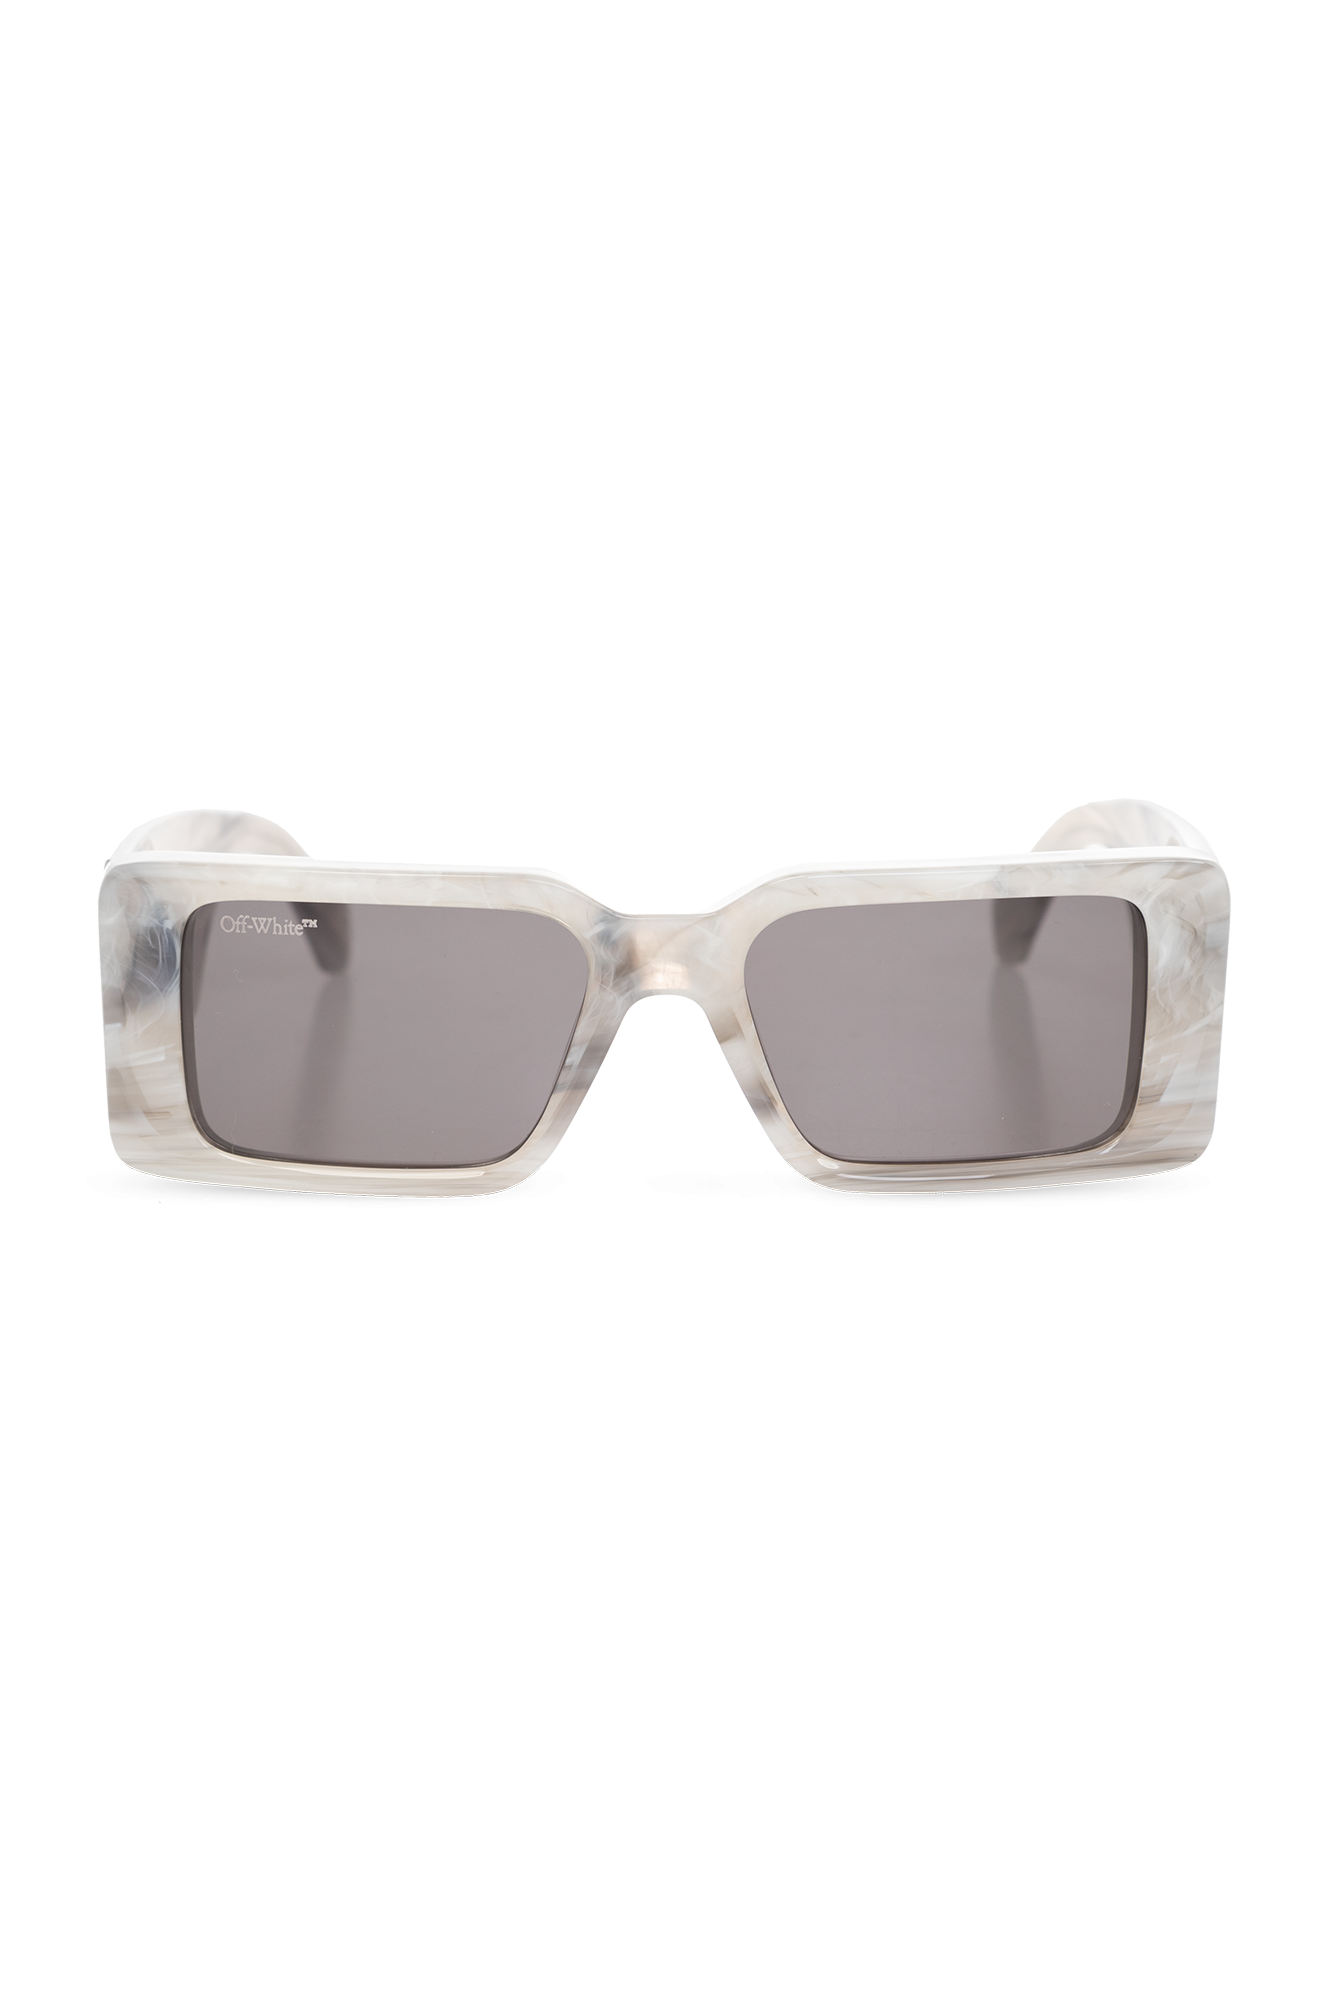 Off-White ‘Milano’ sunglasses